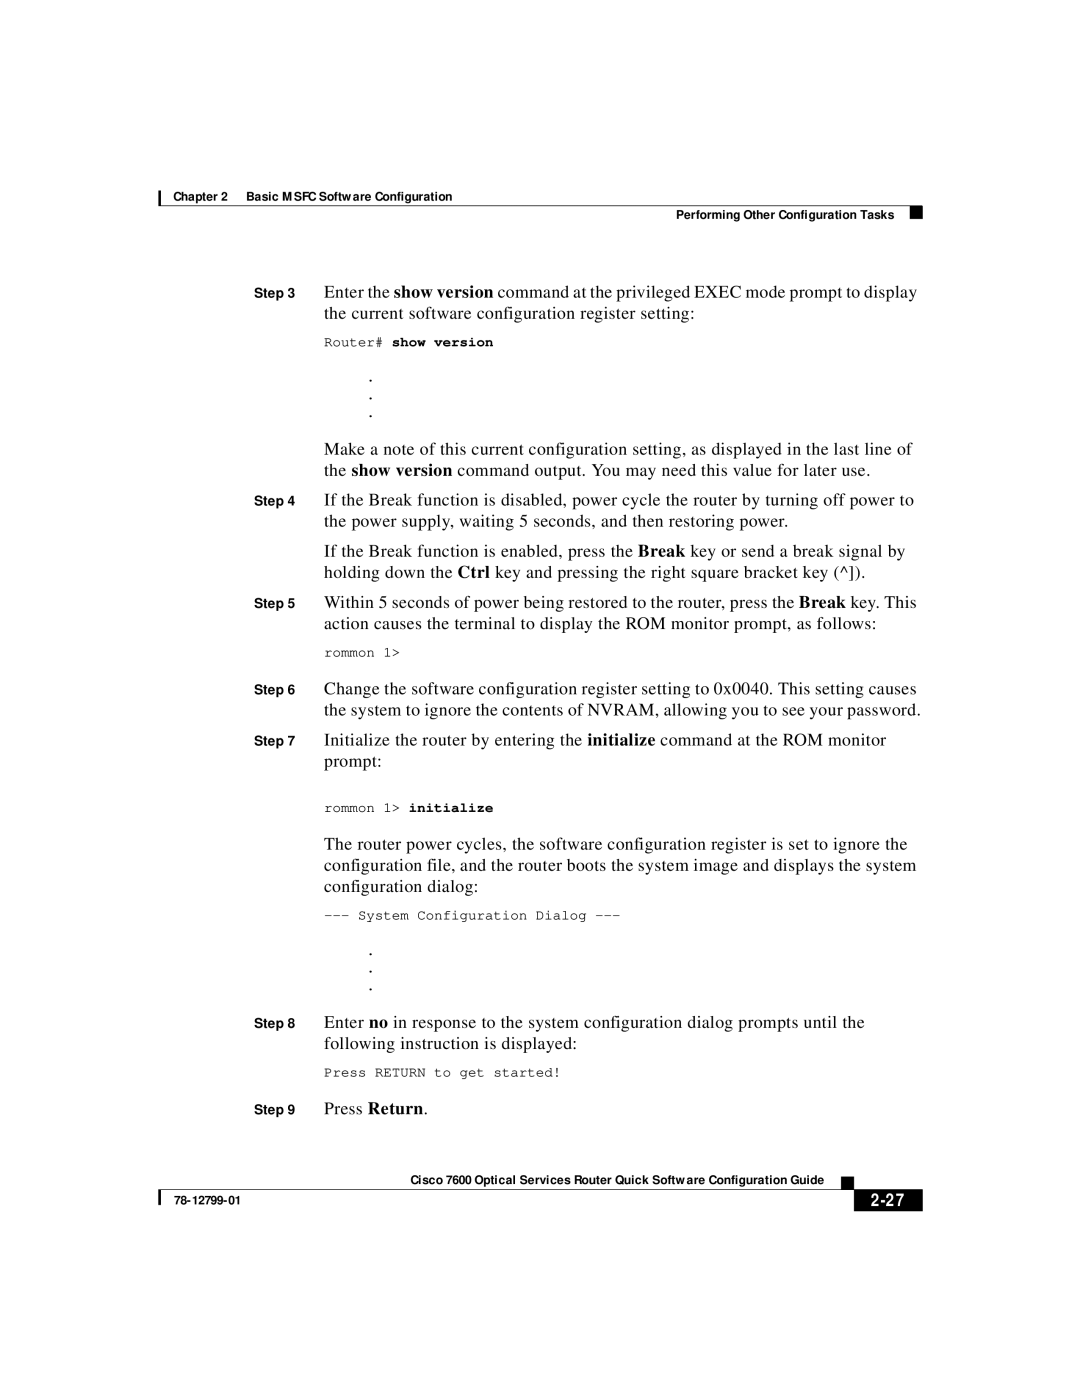 Cisco Systems 7600 manual 2-27, Press Return 